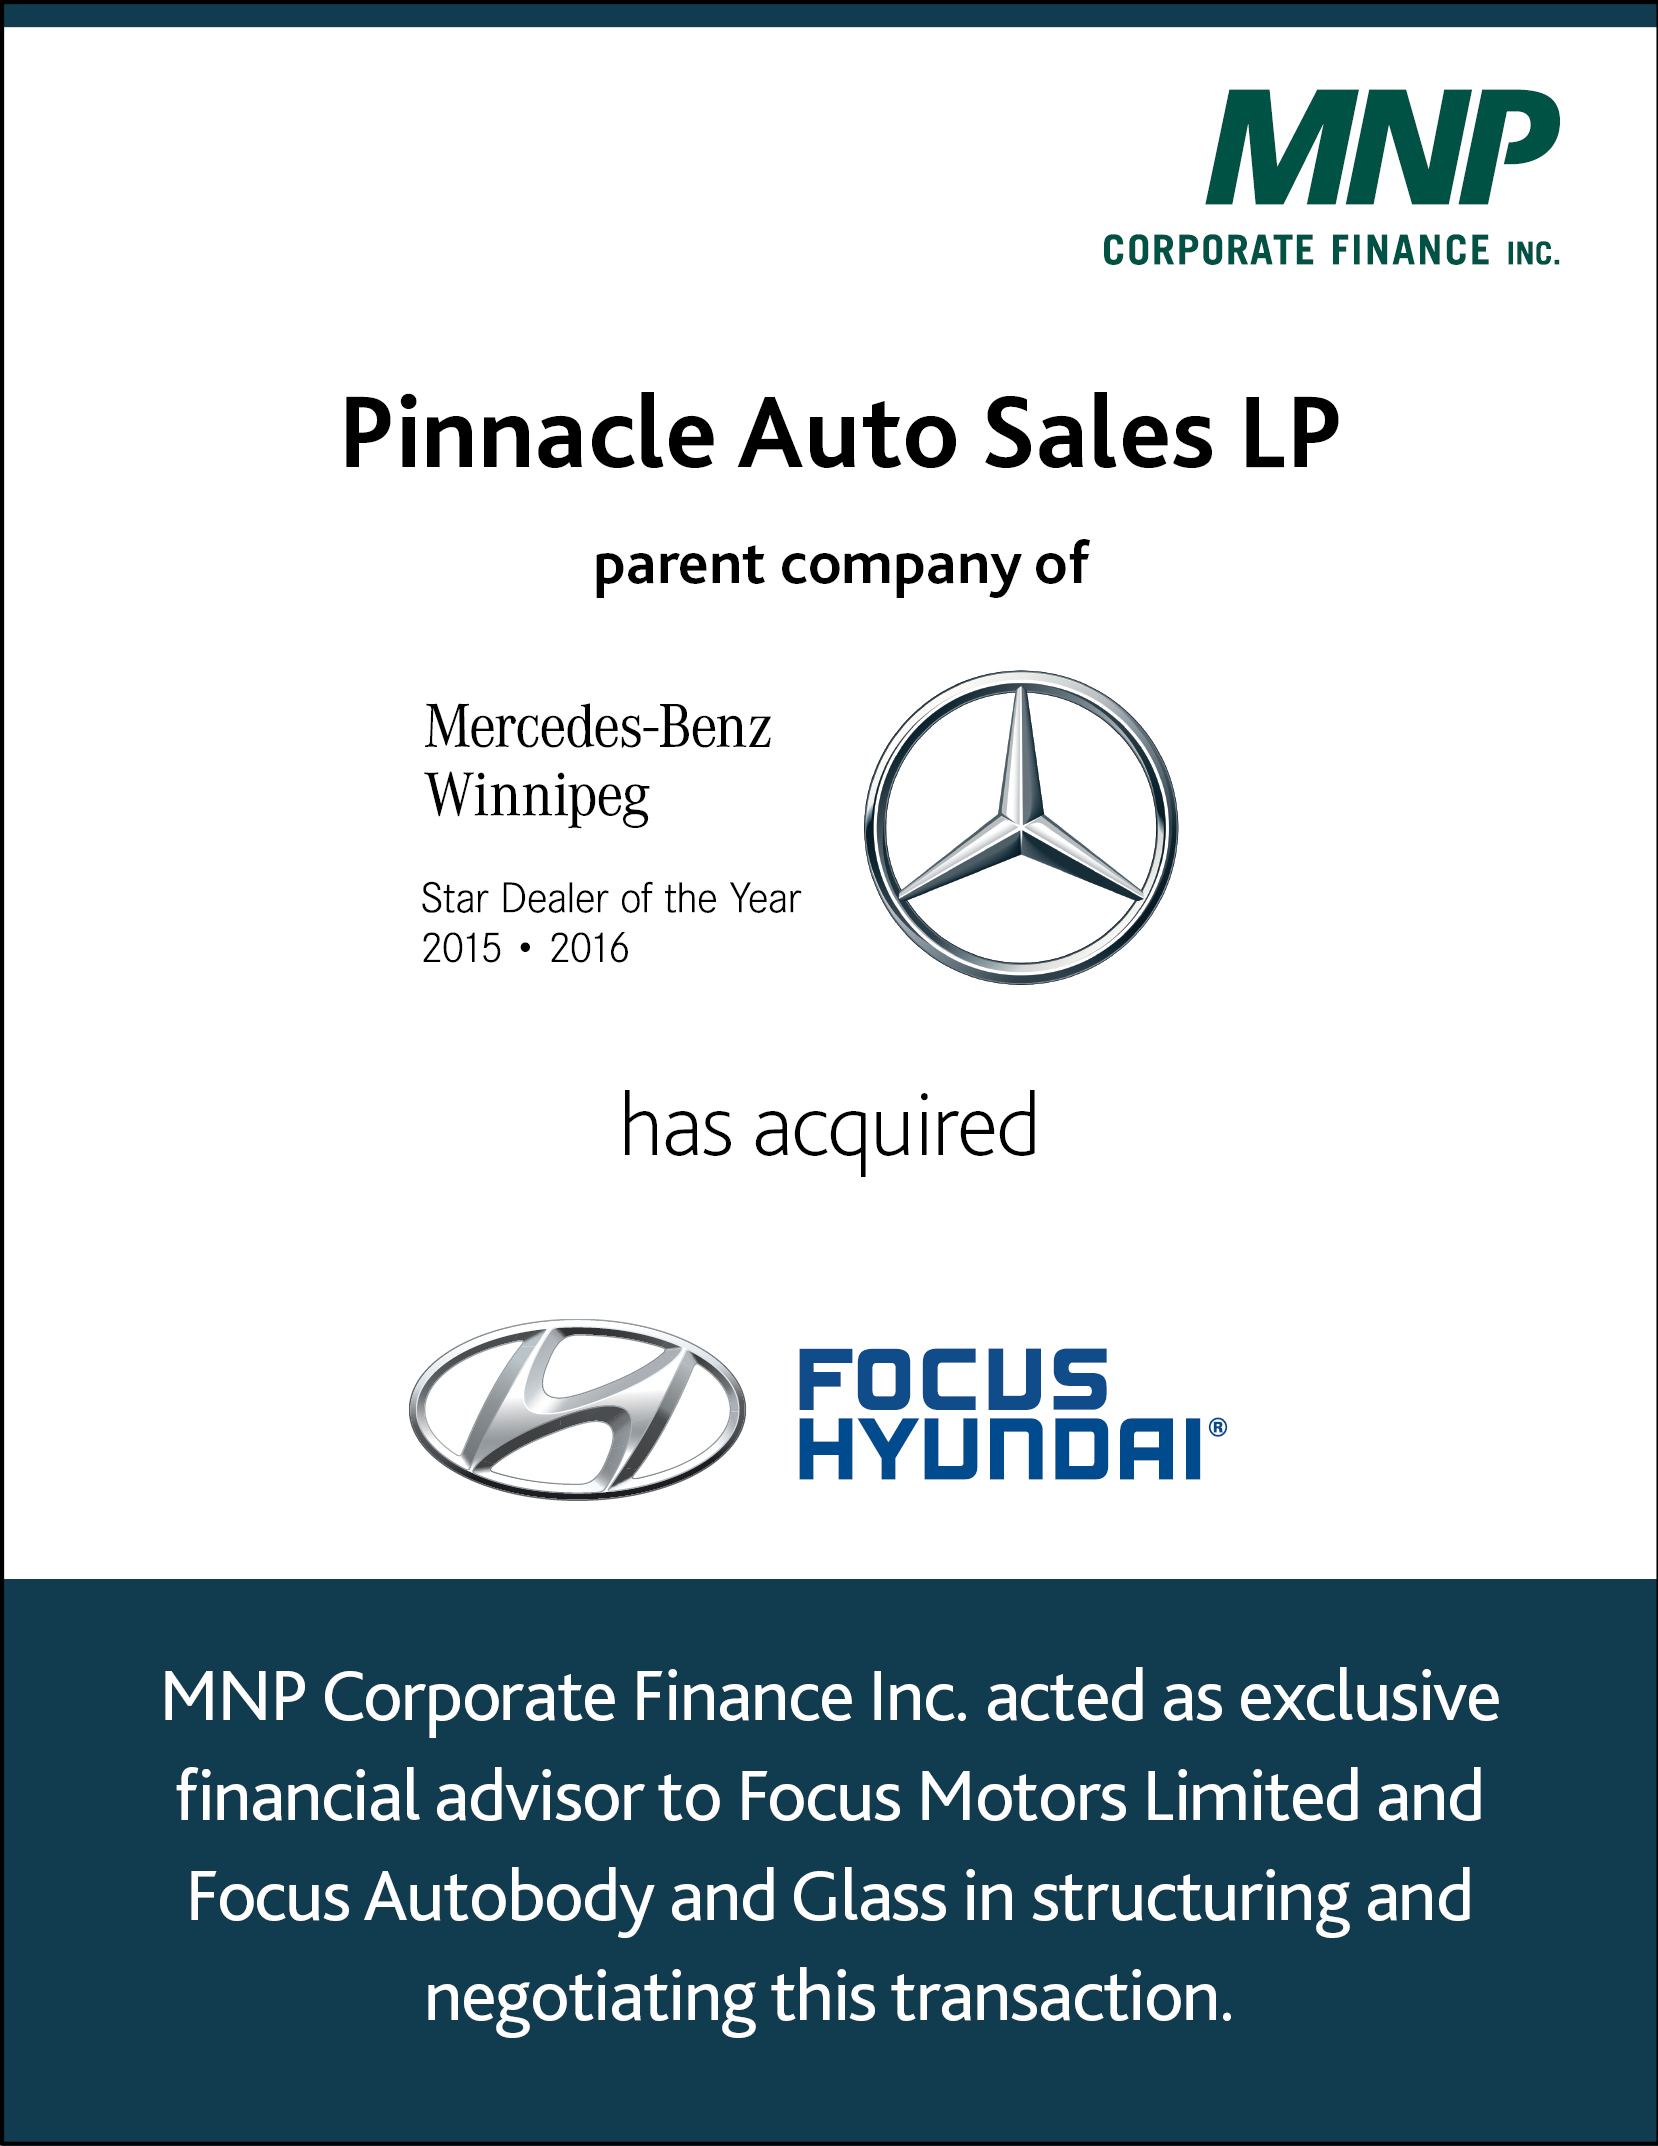 Pinnacle Auto Sales LP Parent Company of Mercedes-Benz Winnipeg has acquired Focus Hyundai. 